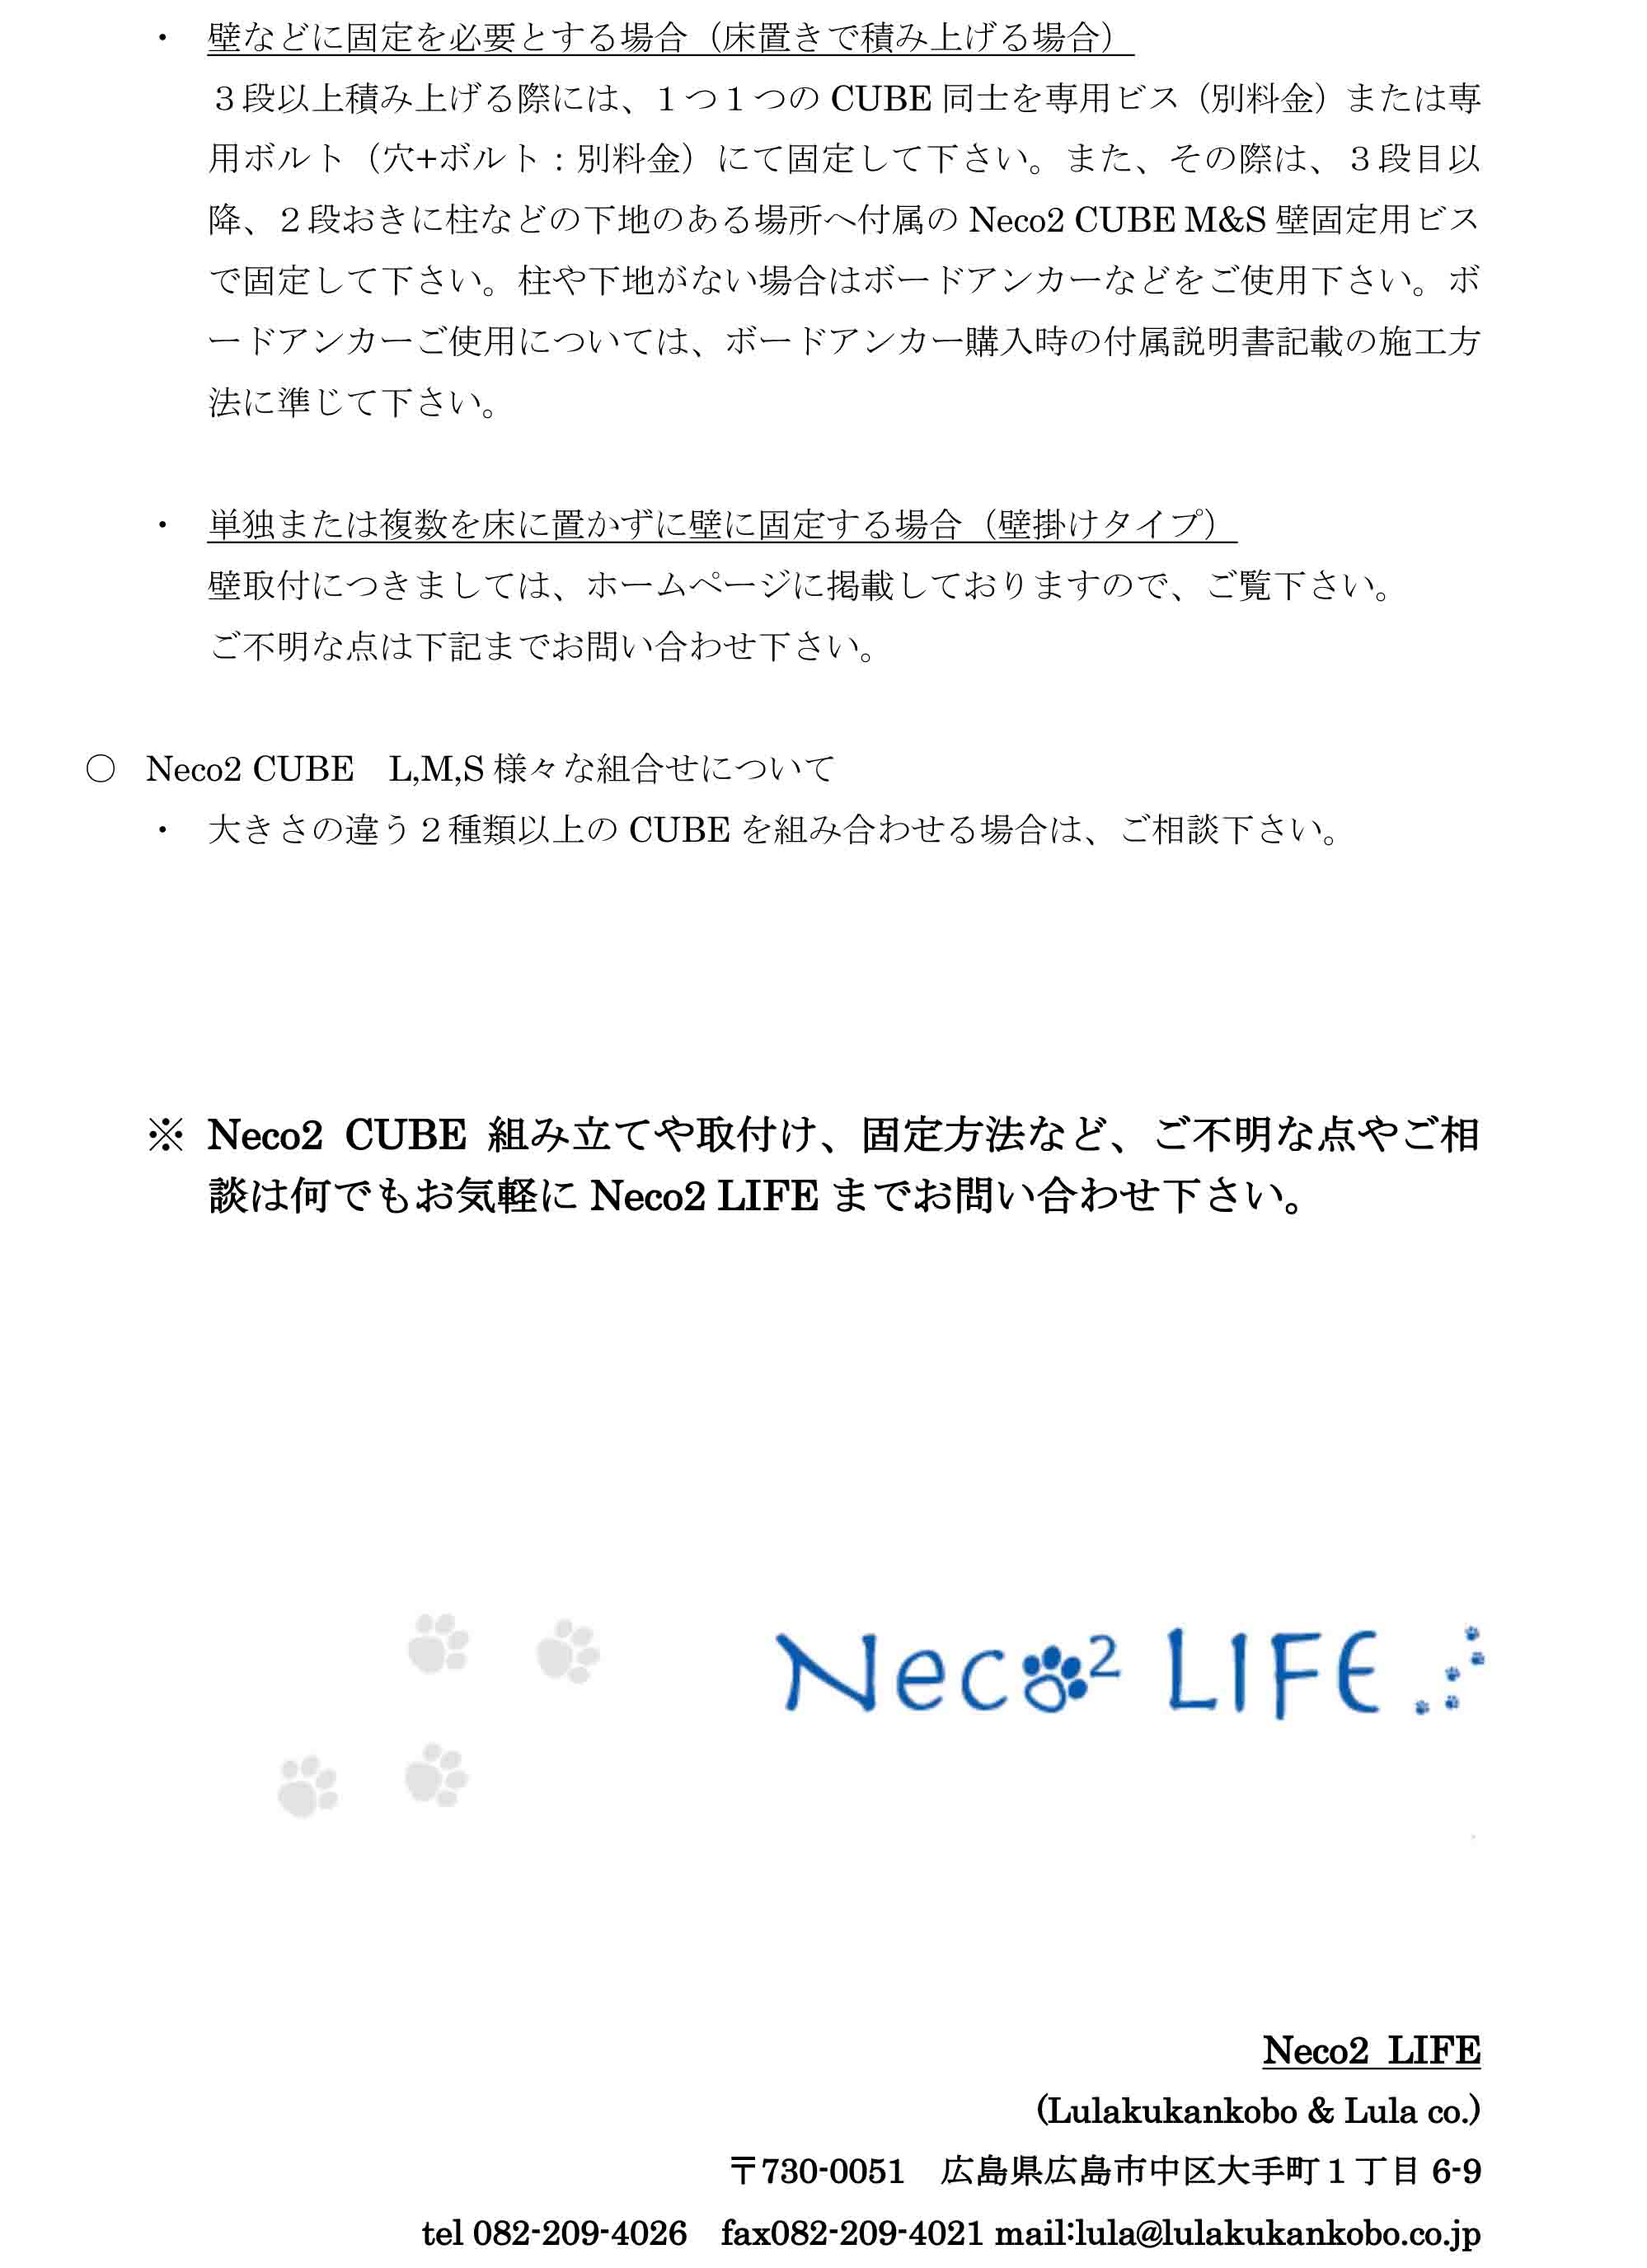 Neco2CUBE商品取扱説明書3